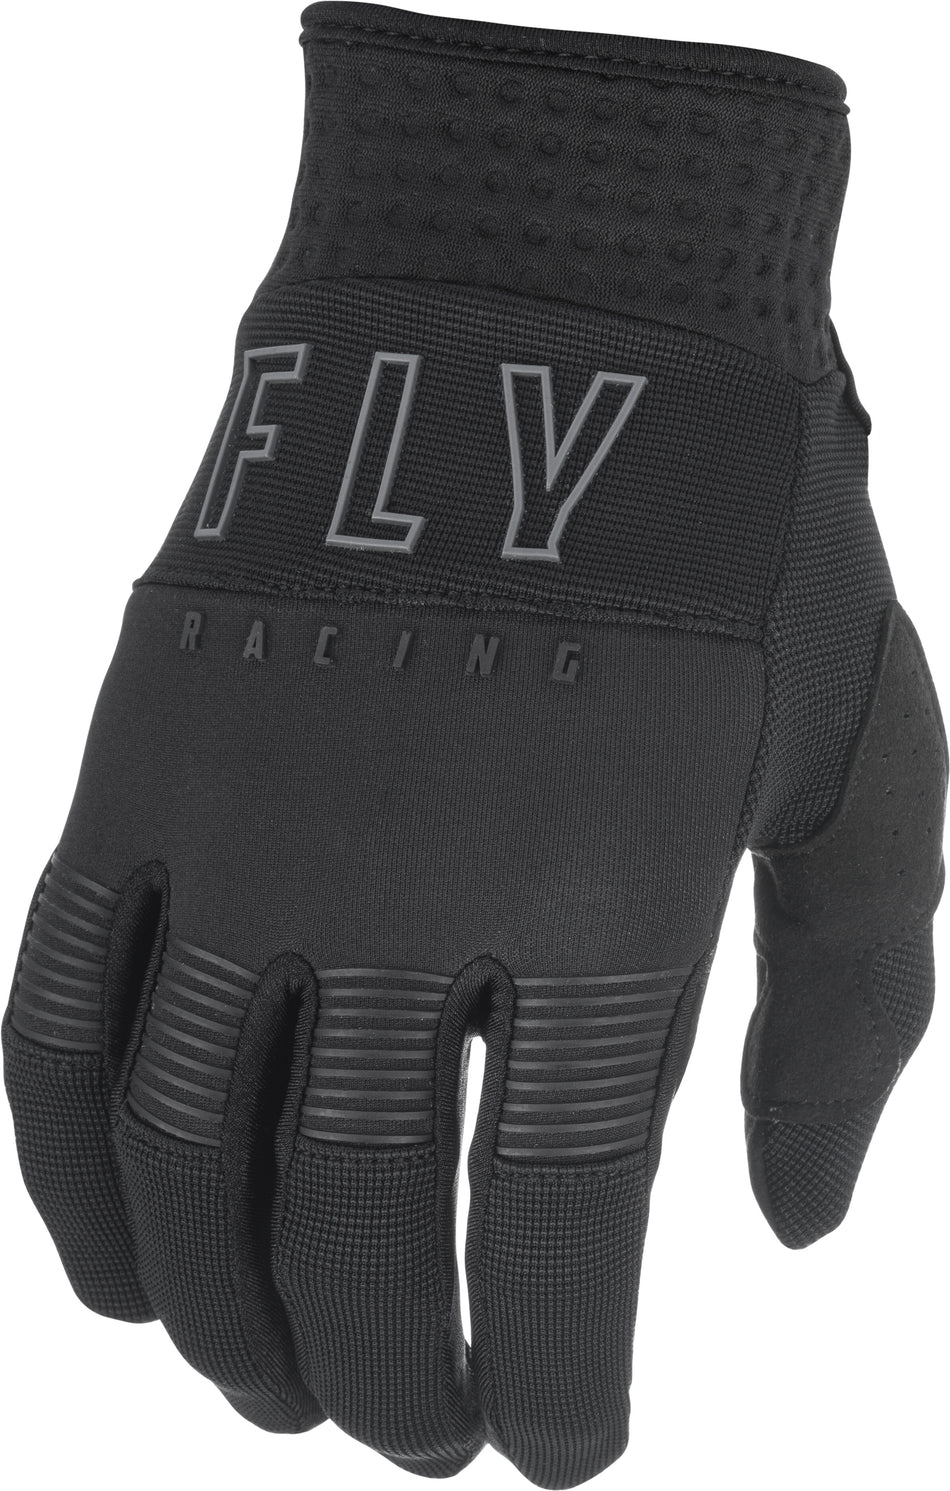 FLY RACING F-16 Gloves Black Sz 08 374-91708